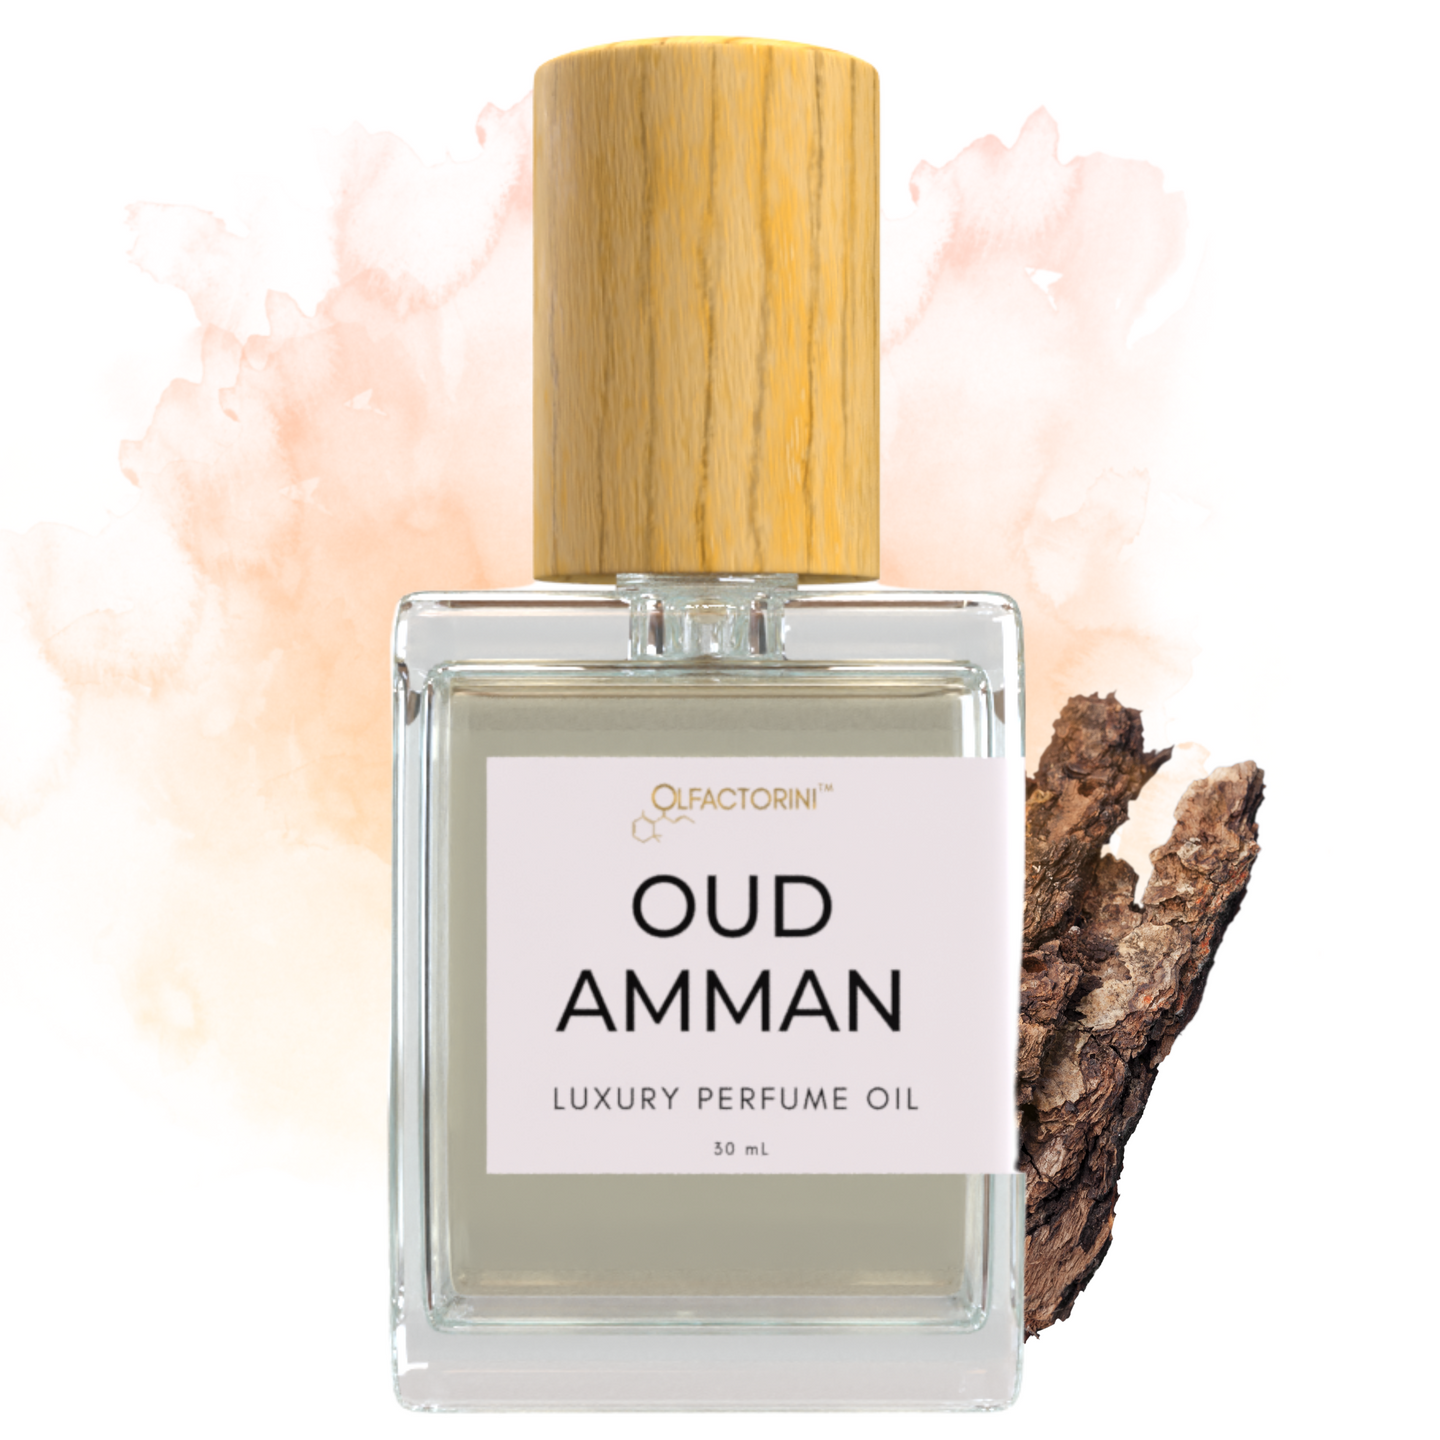 Oud Amman Luxury Perfume Oil